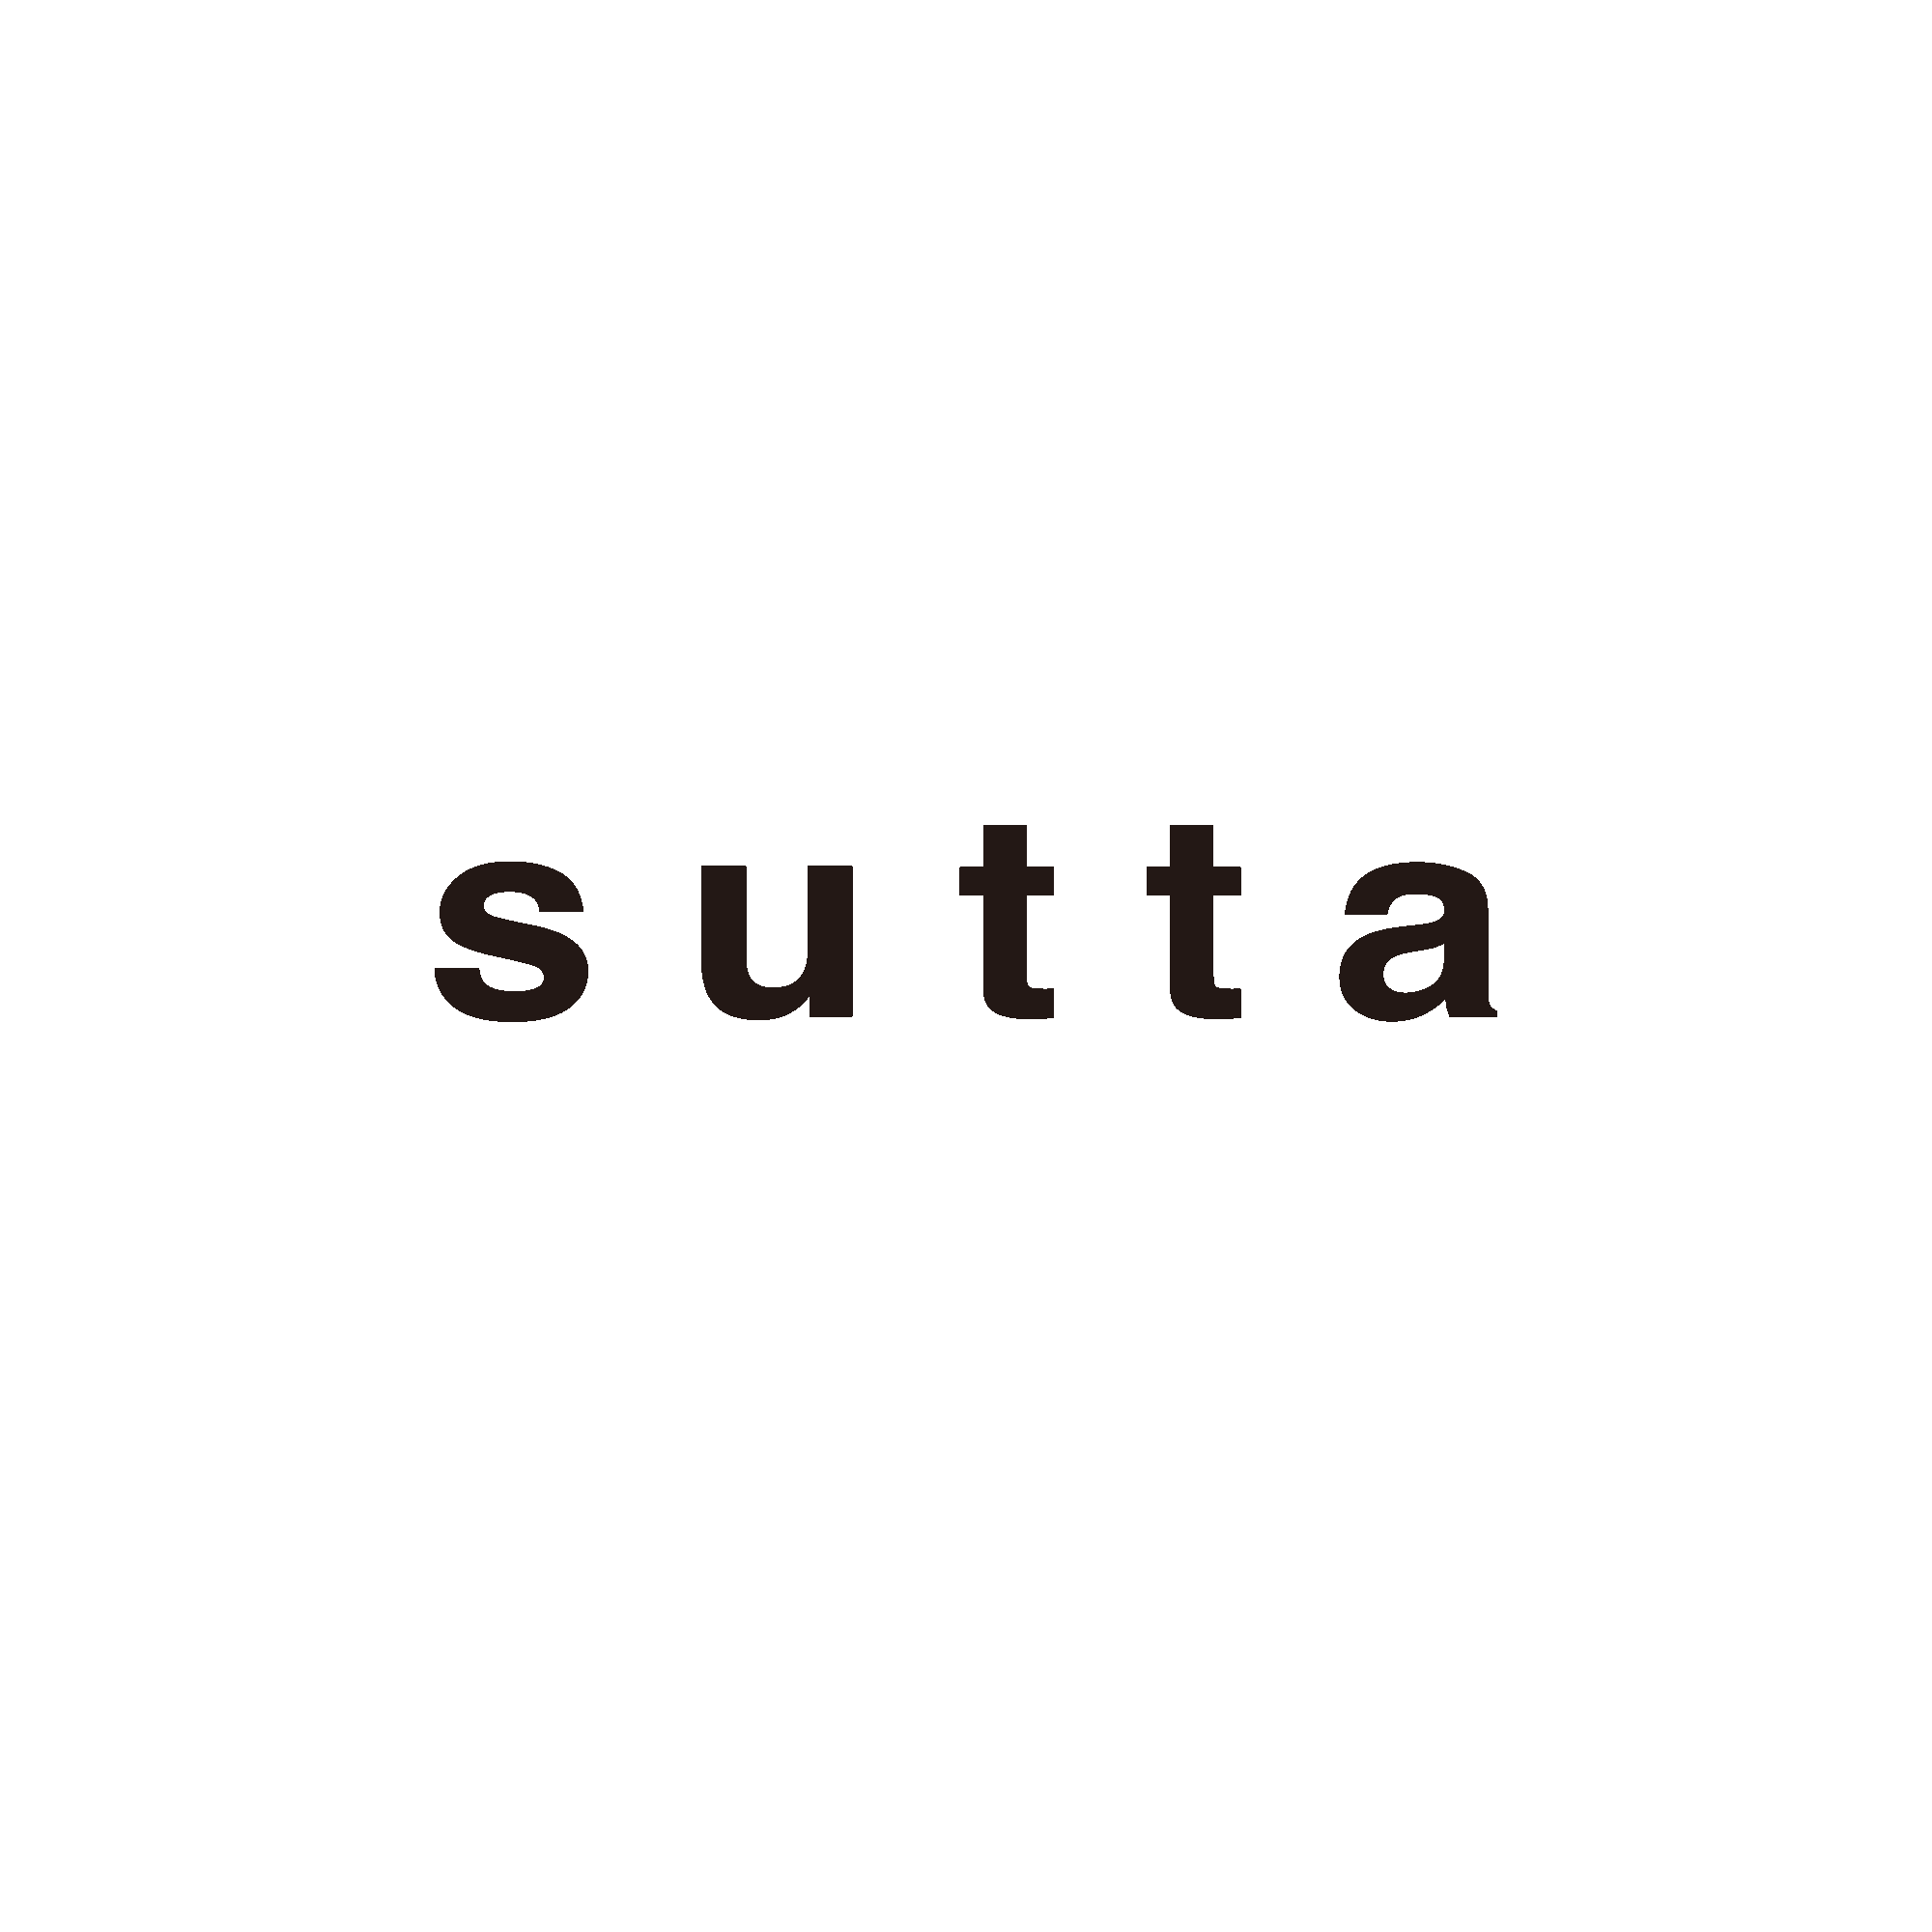 sutta_logo